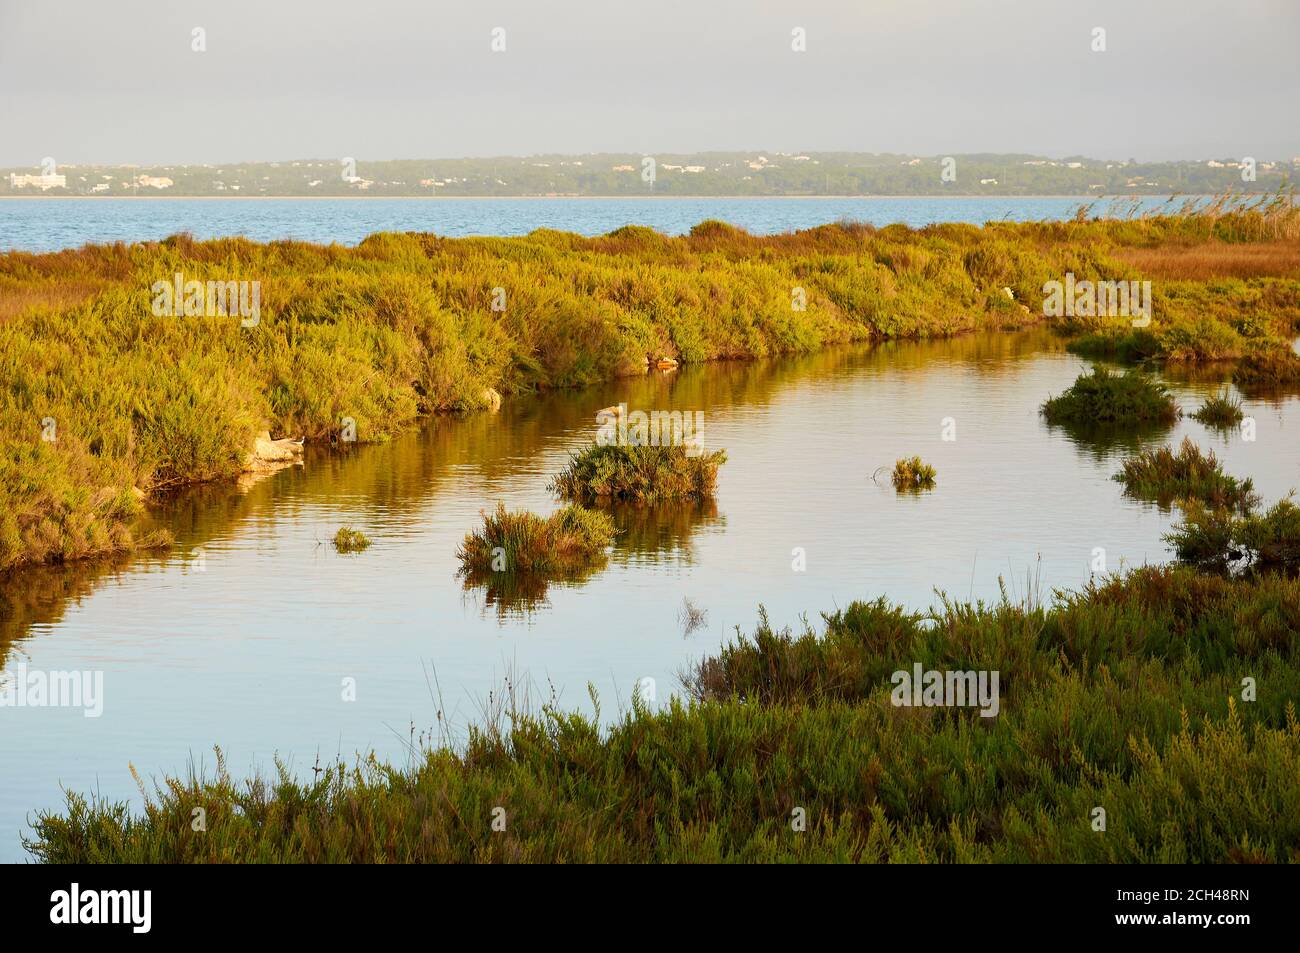 Estany Pudent marine lagoon with Salicornioideae vegetation in Ses Salines Natural Park (Formentera, Balearic Islands, Mediterranean Sea, Spain) Stock Photo